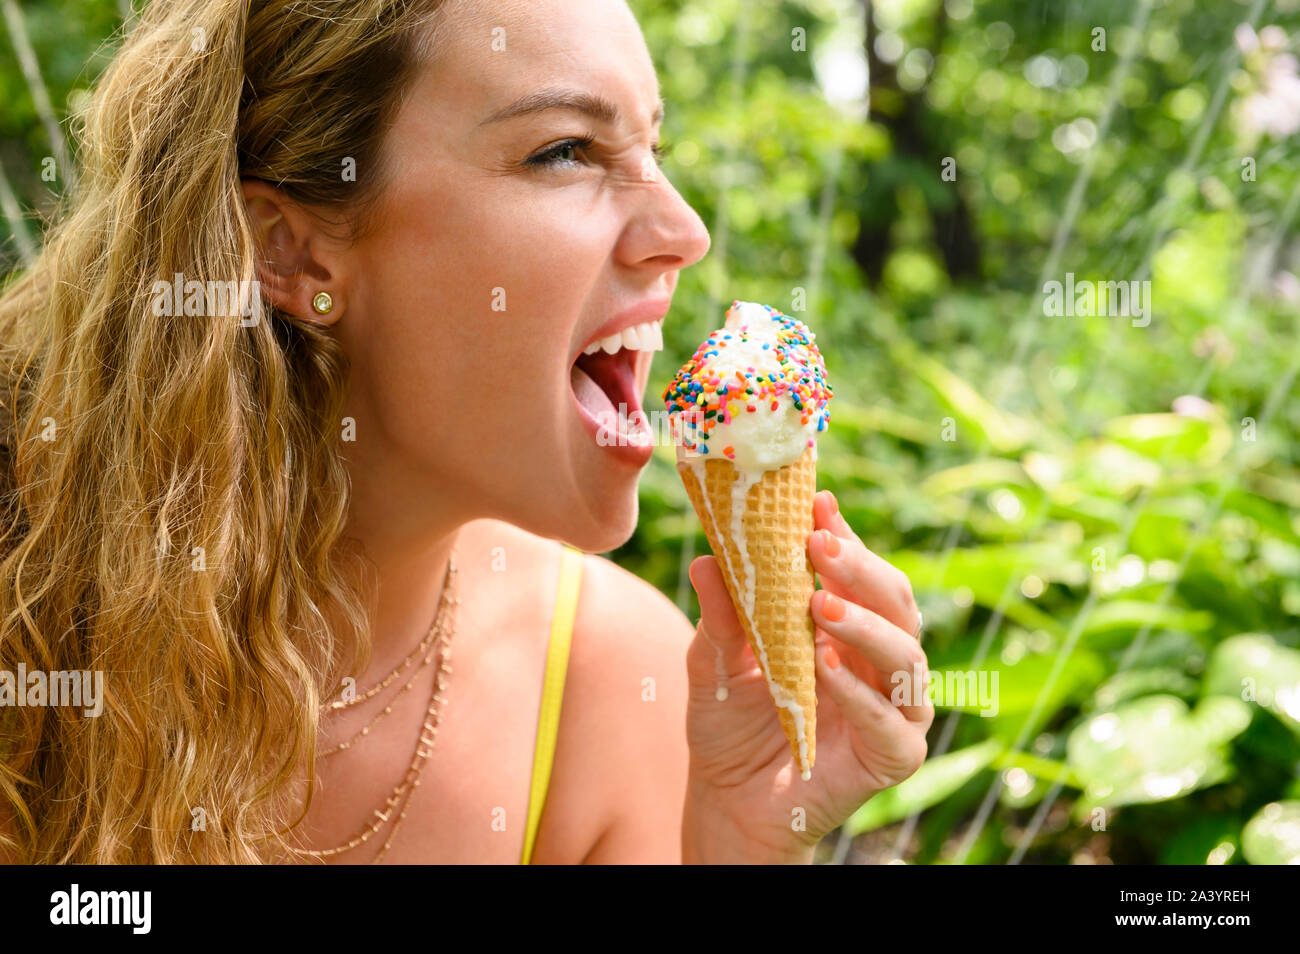 Young woman biting ice cream cone Stock Photo